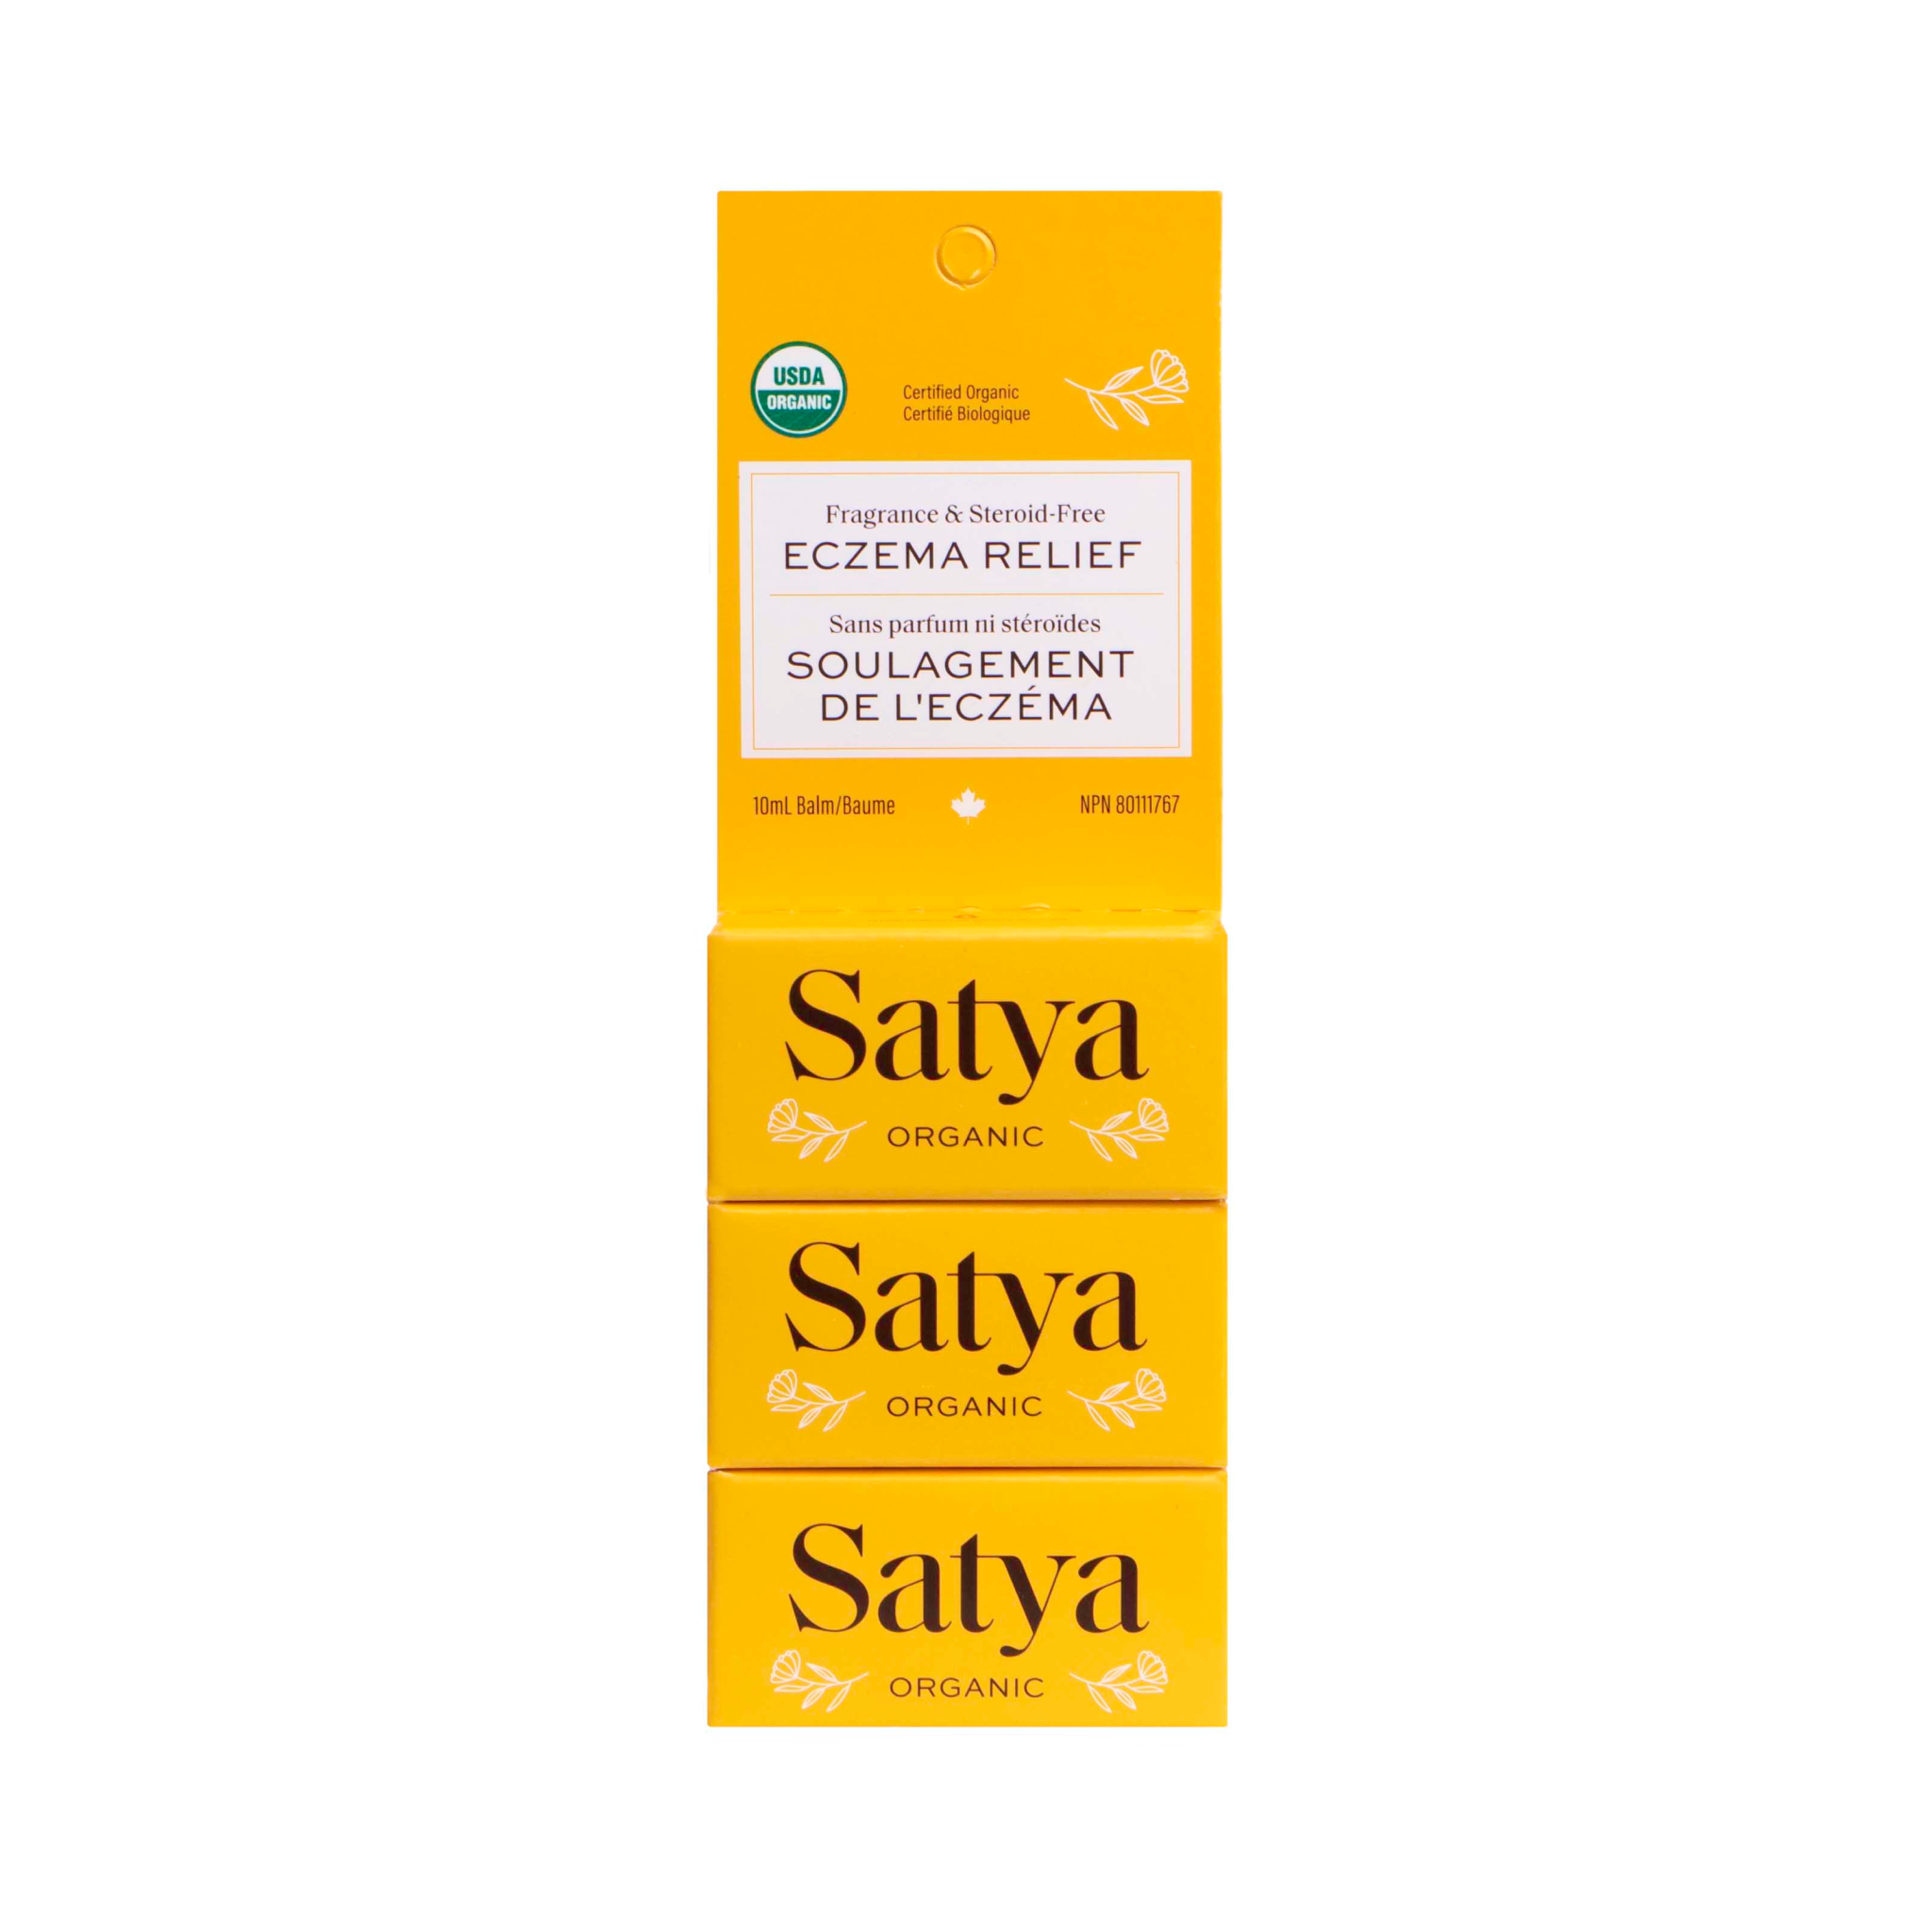  Satya Eczema Relief balm, 10ml tin (3 pack)